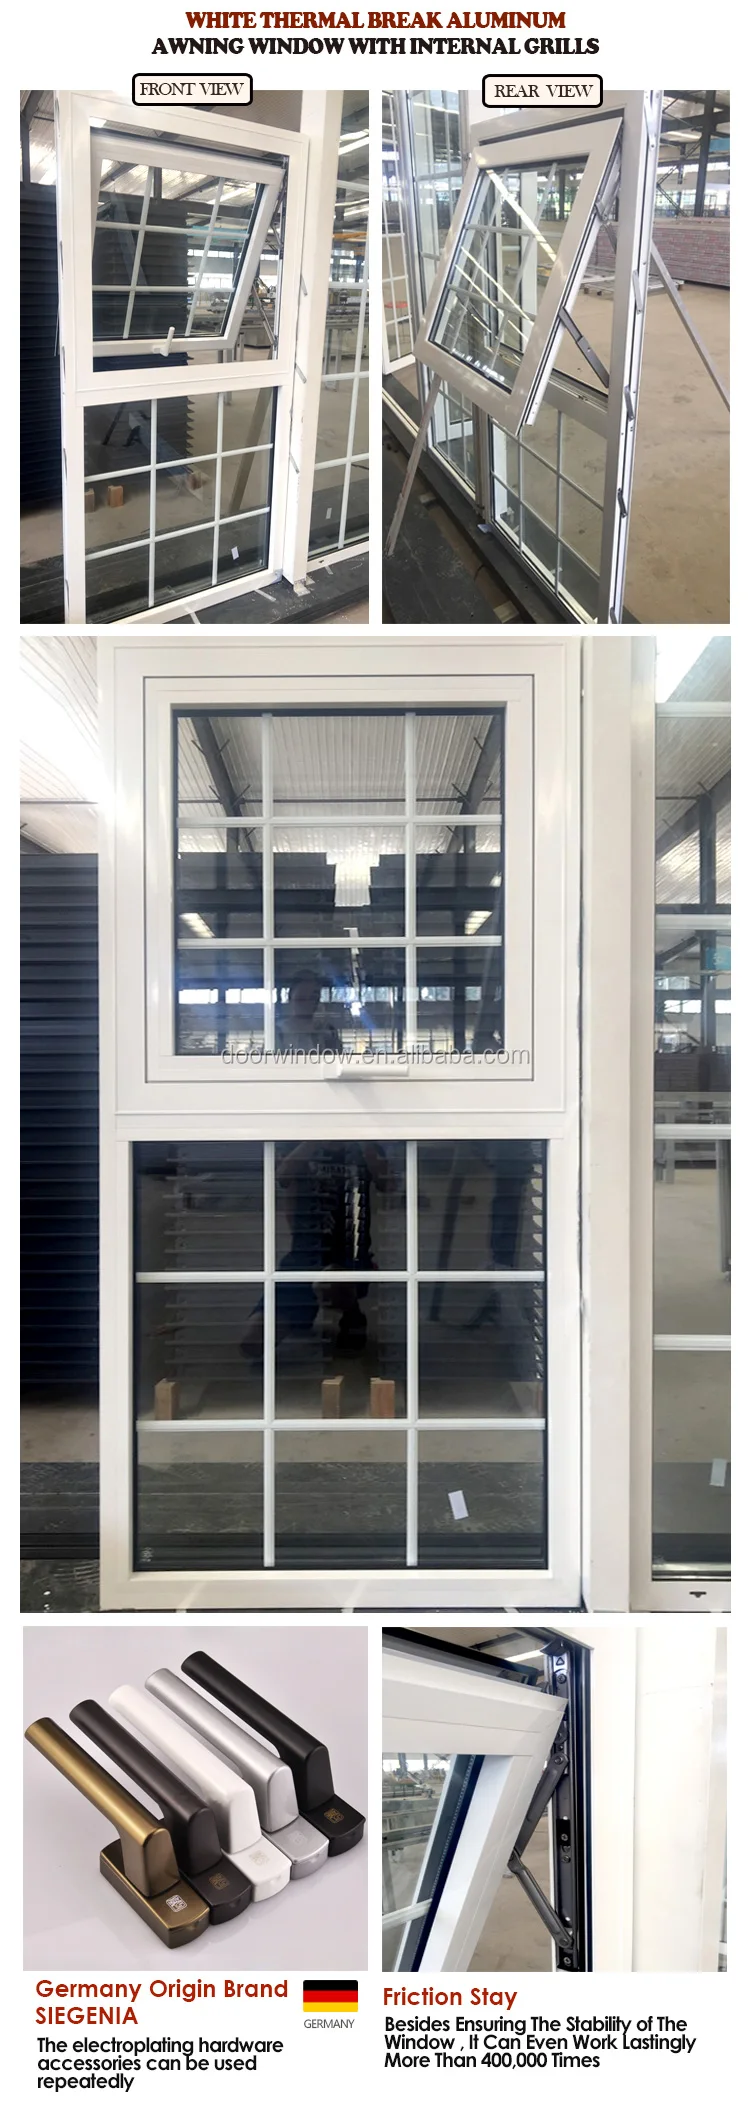 Cheap powder coated finish thermal break aluminium fixed windows american standard double glazing picture window